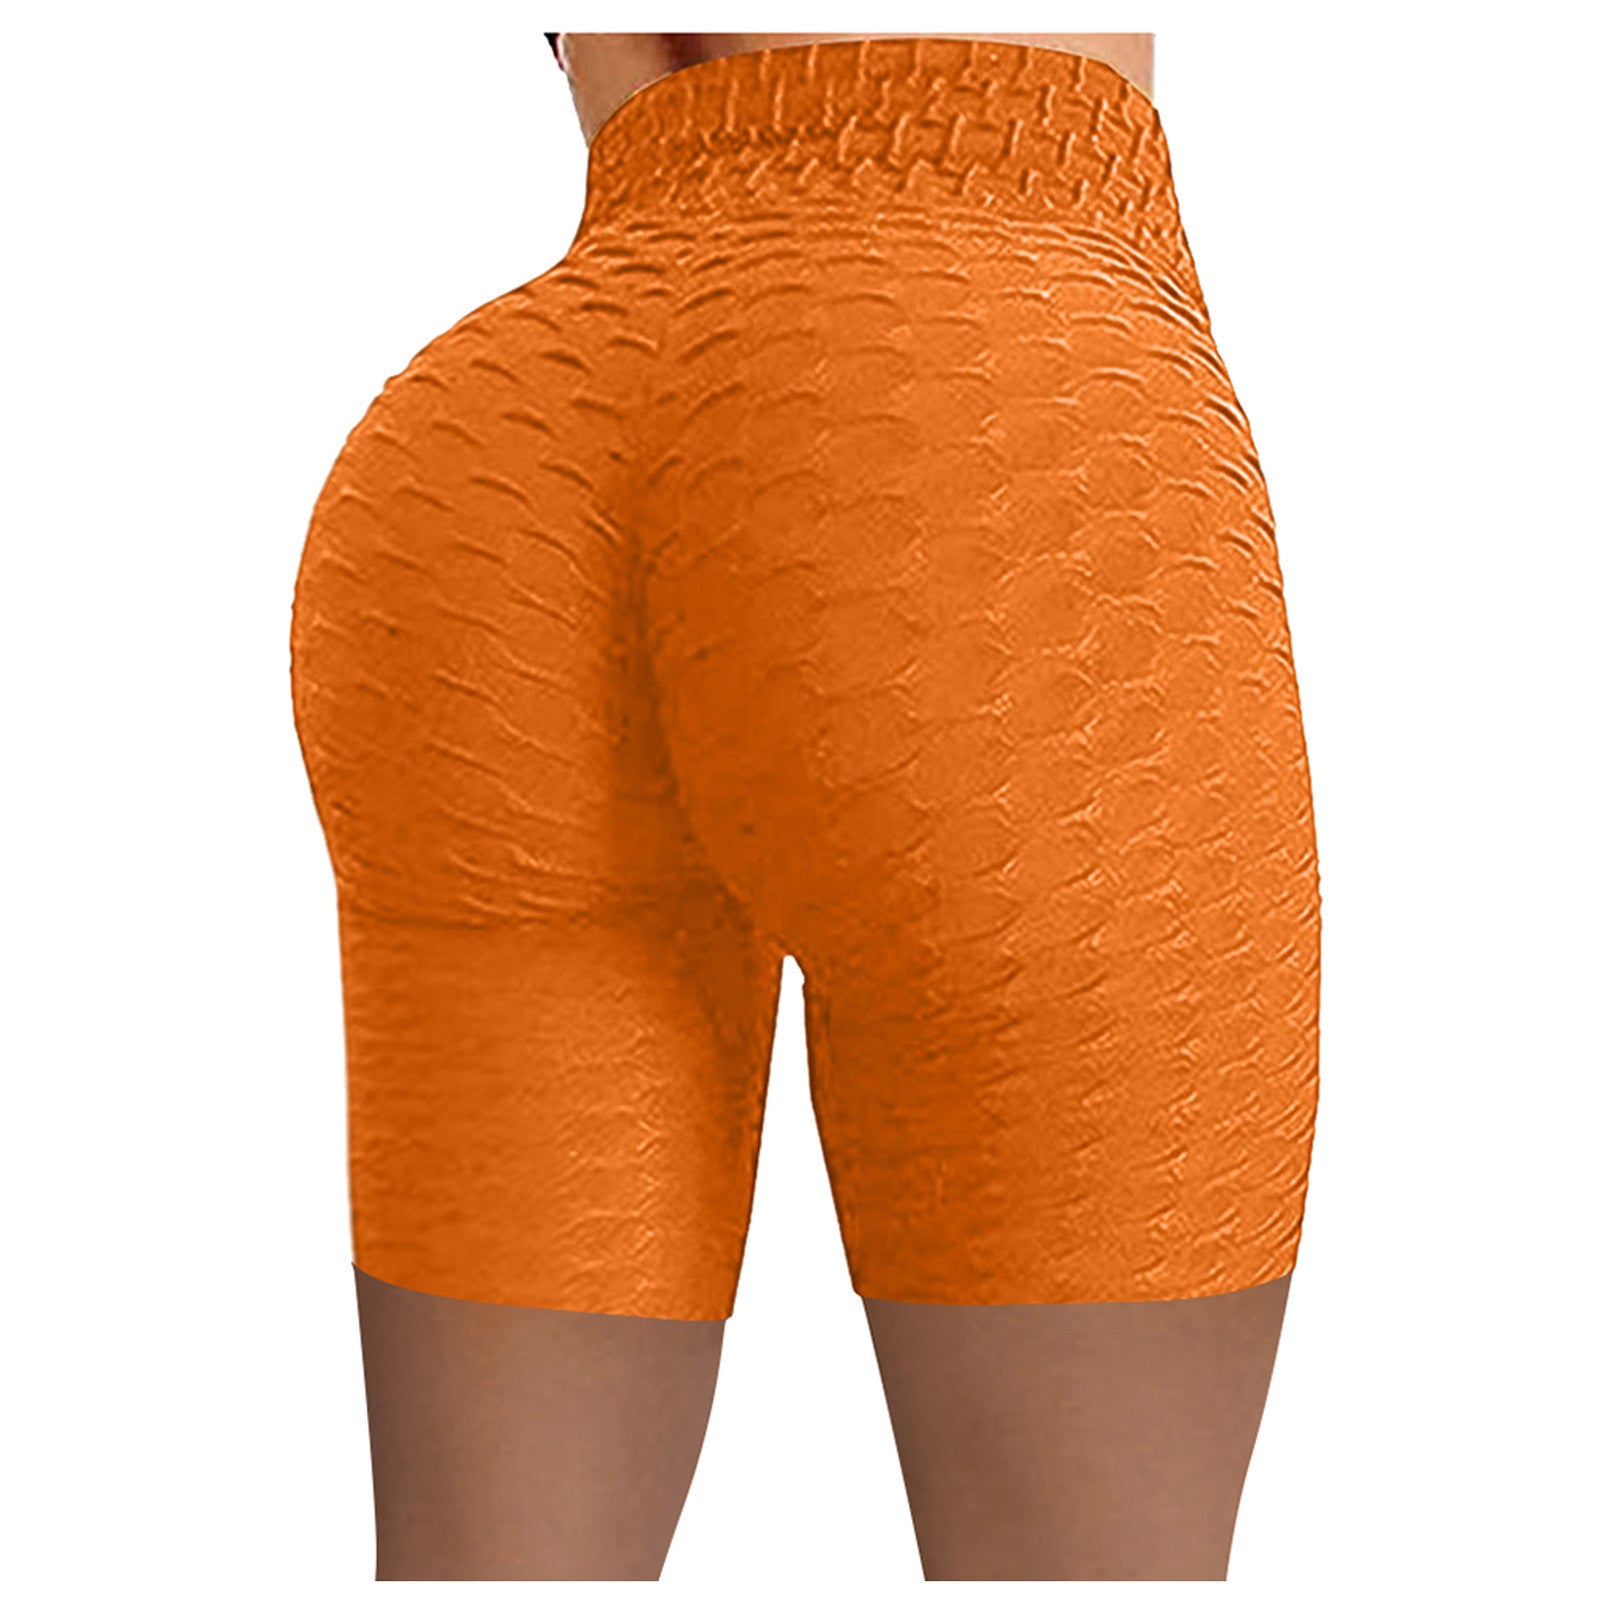 Honeycomb Legging Capri Shorts Back View Orange